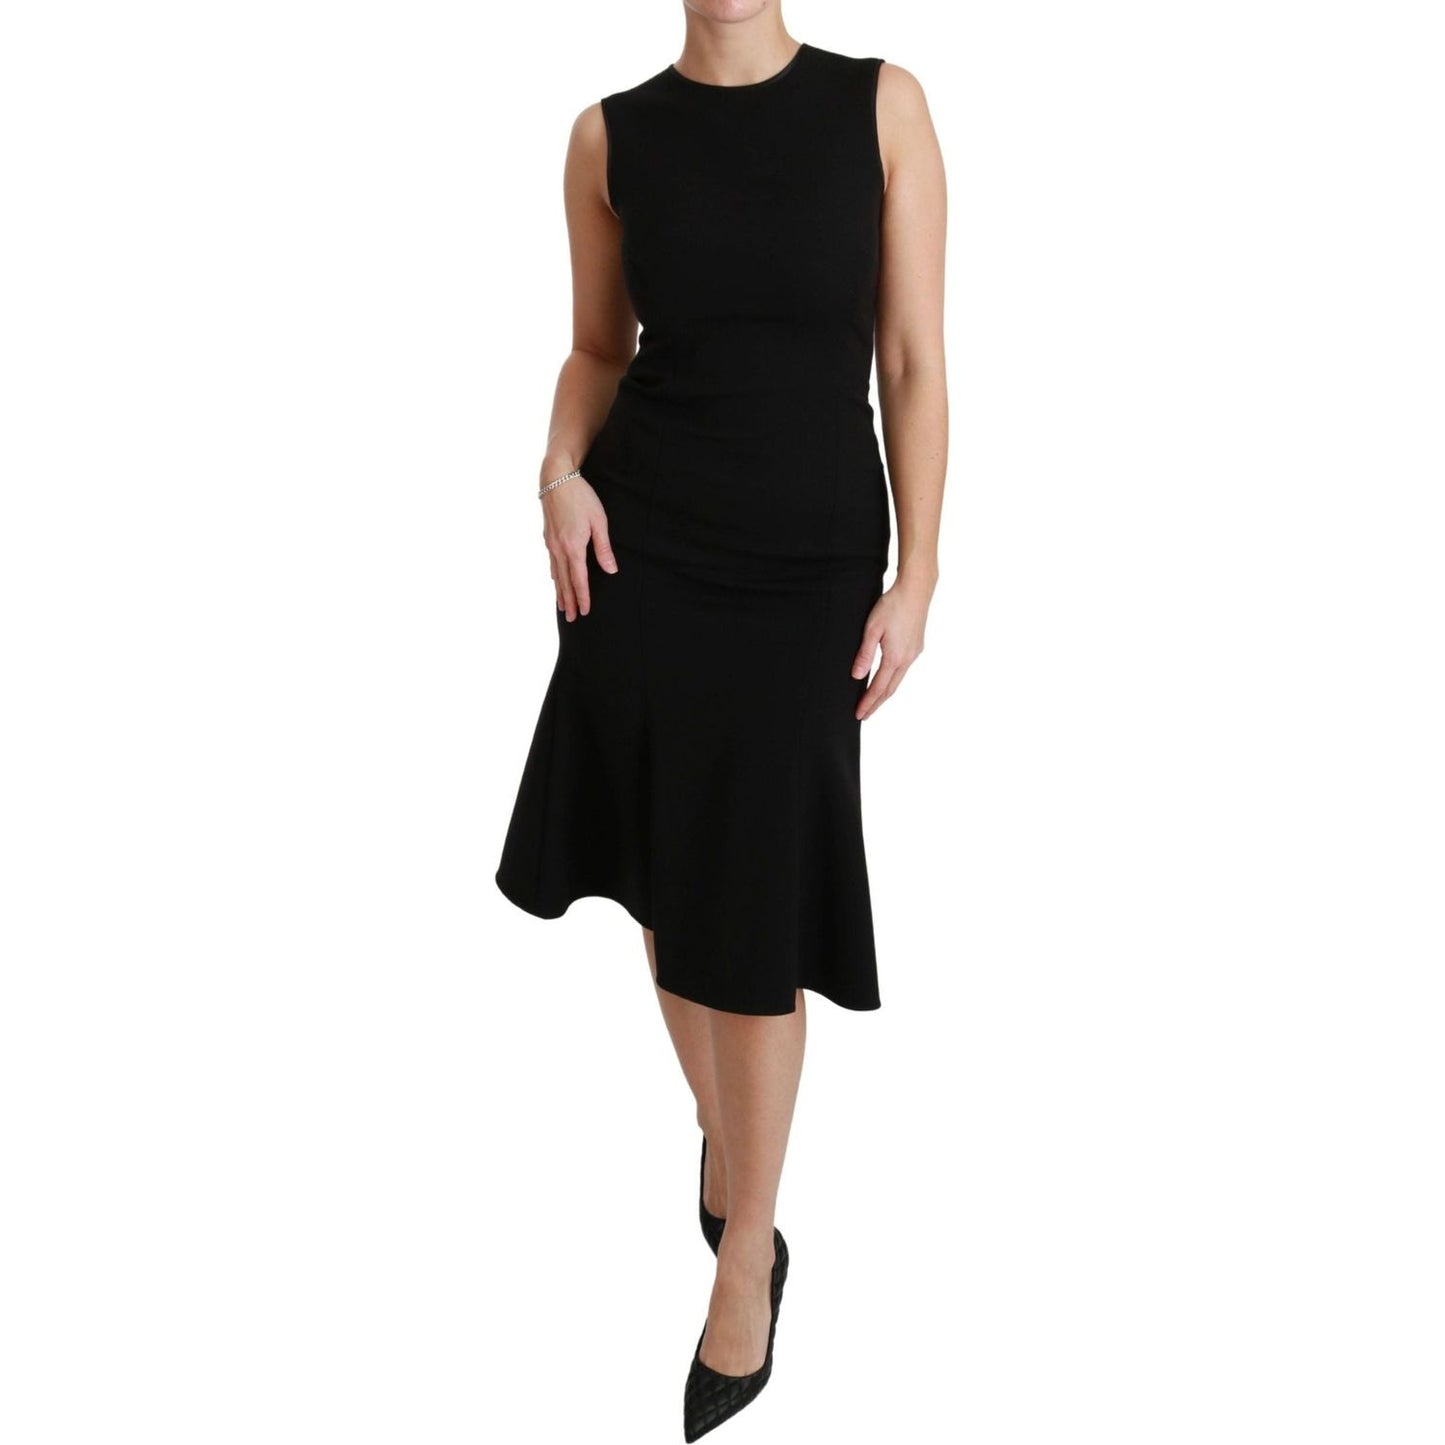 Dolce & Gabbana Elegant Black Fit Flare Wool Blend Dress black-fit-flare-wool-stretch-sheath-dress WOMAN DRESSES IMG_6963-scaled-1cfafb79-2f3.jpg